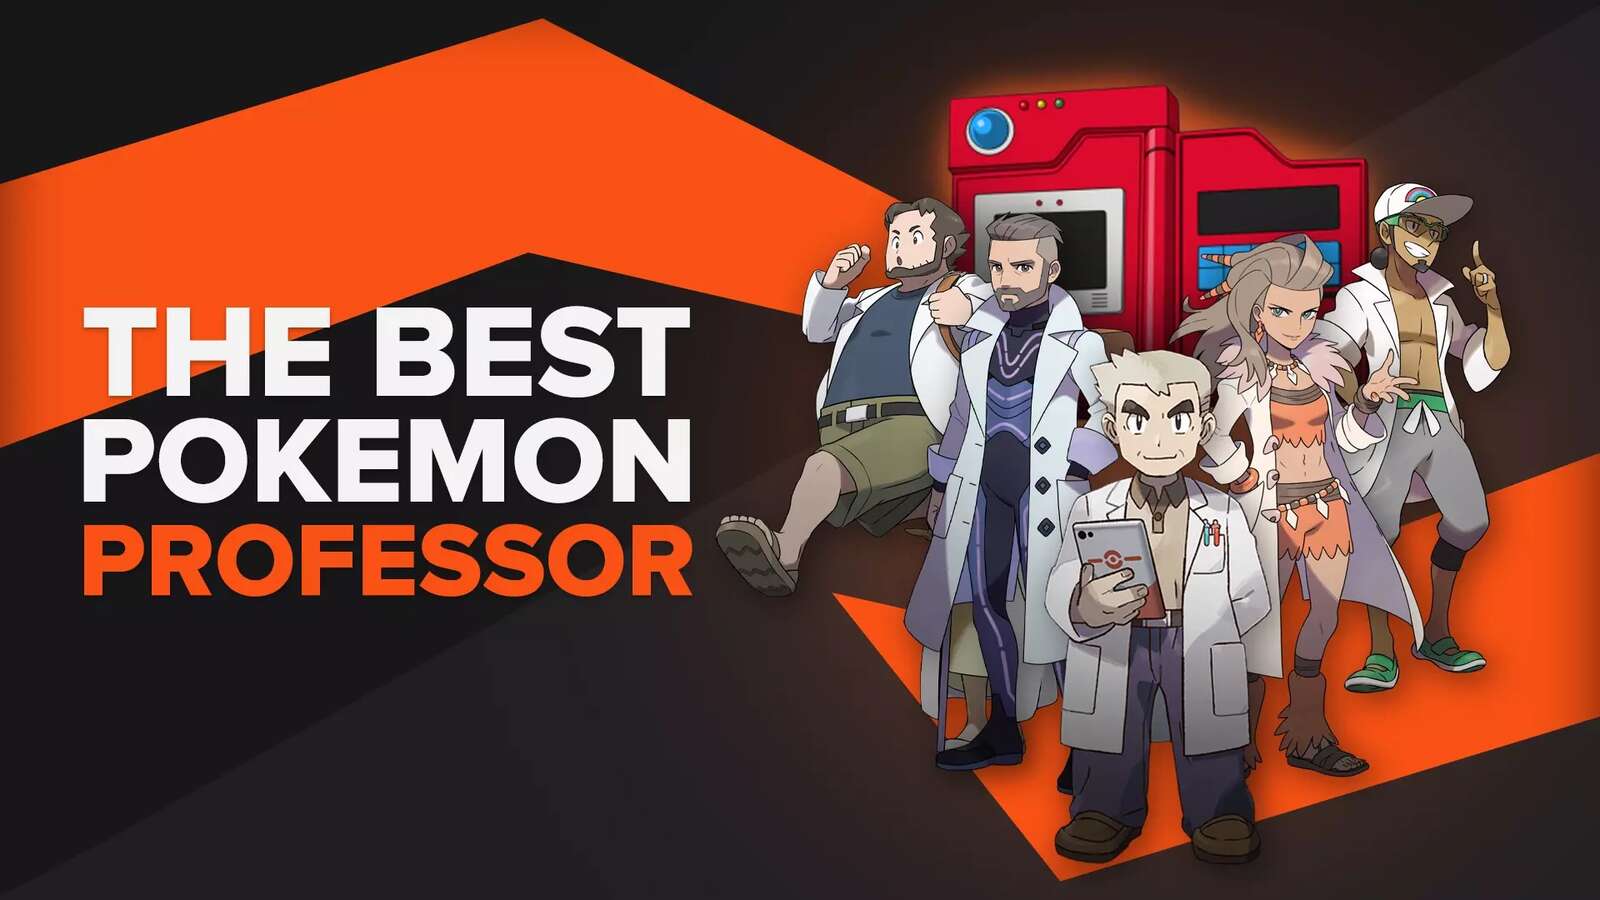 The Best Pokemon Professor [Top 11 Ranked]